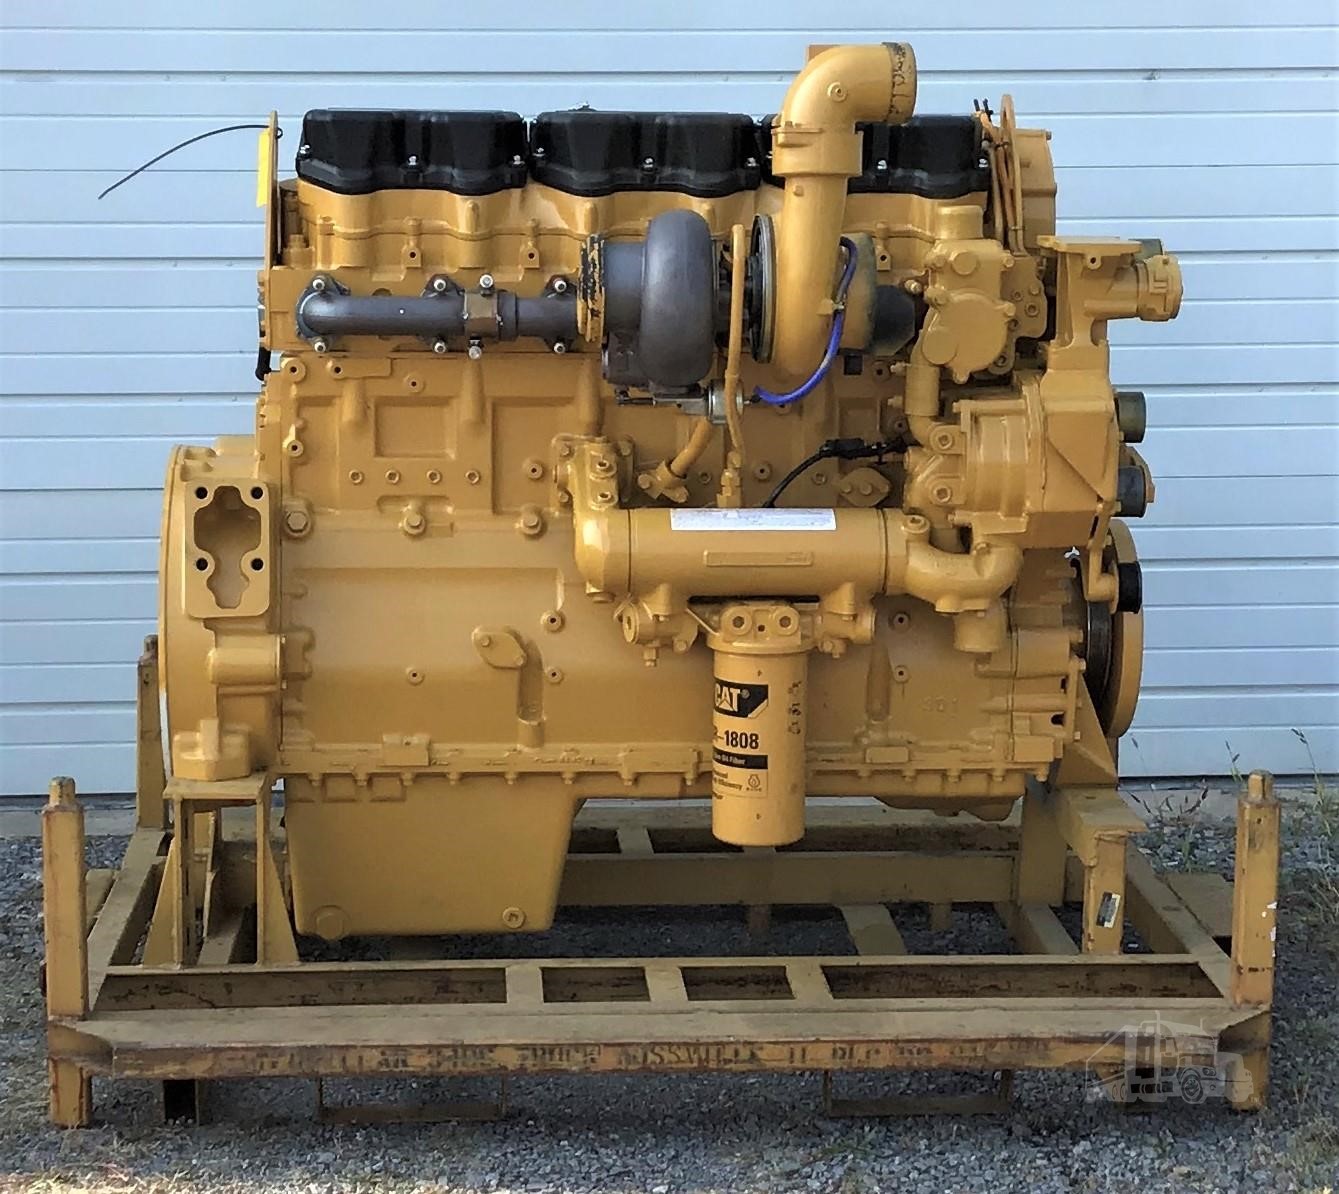 CAT 3406E Engine For Sale In Harrisburg, Pennsylvania